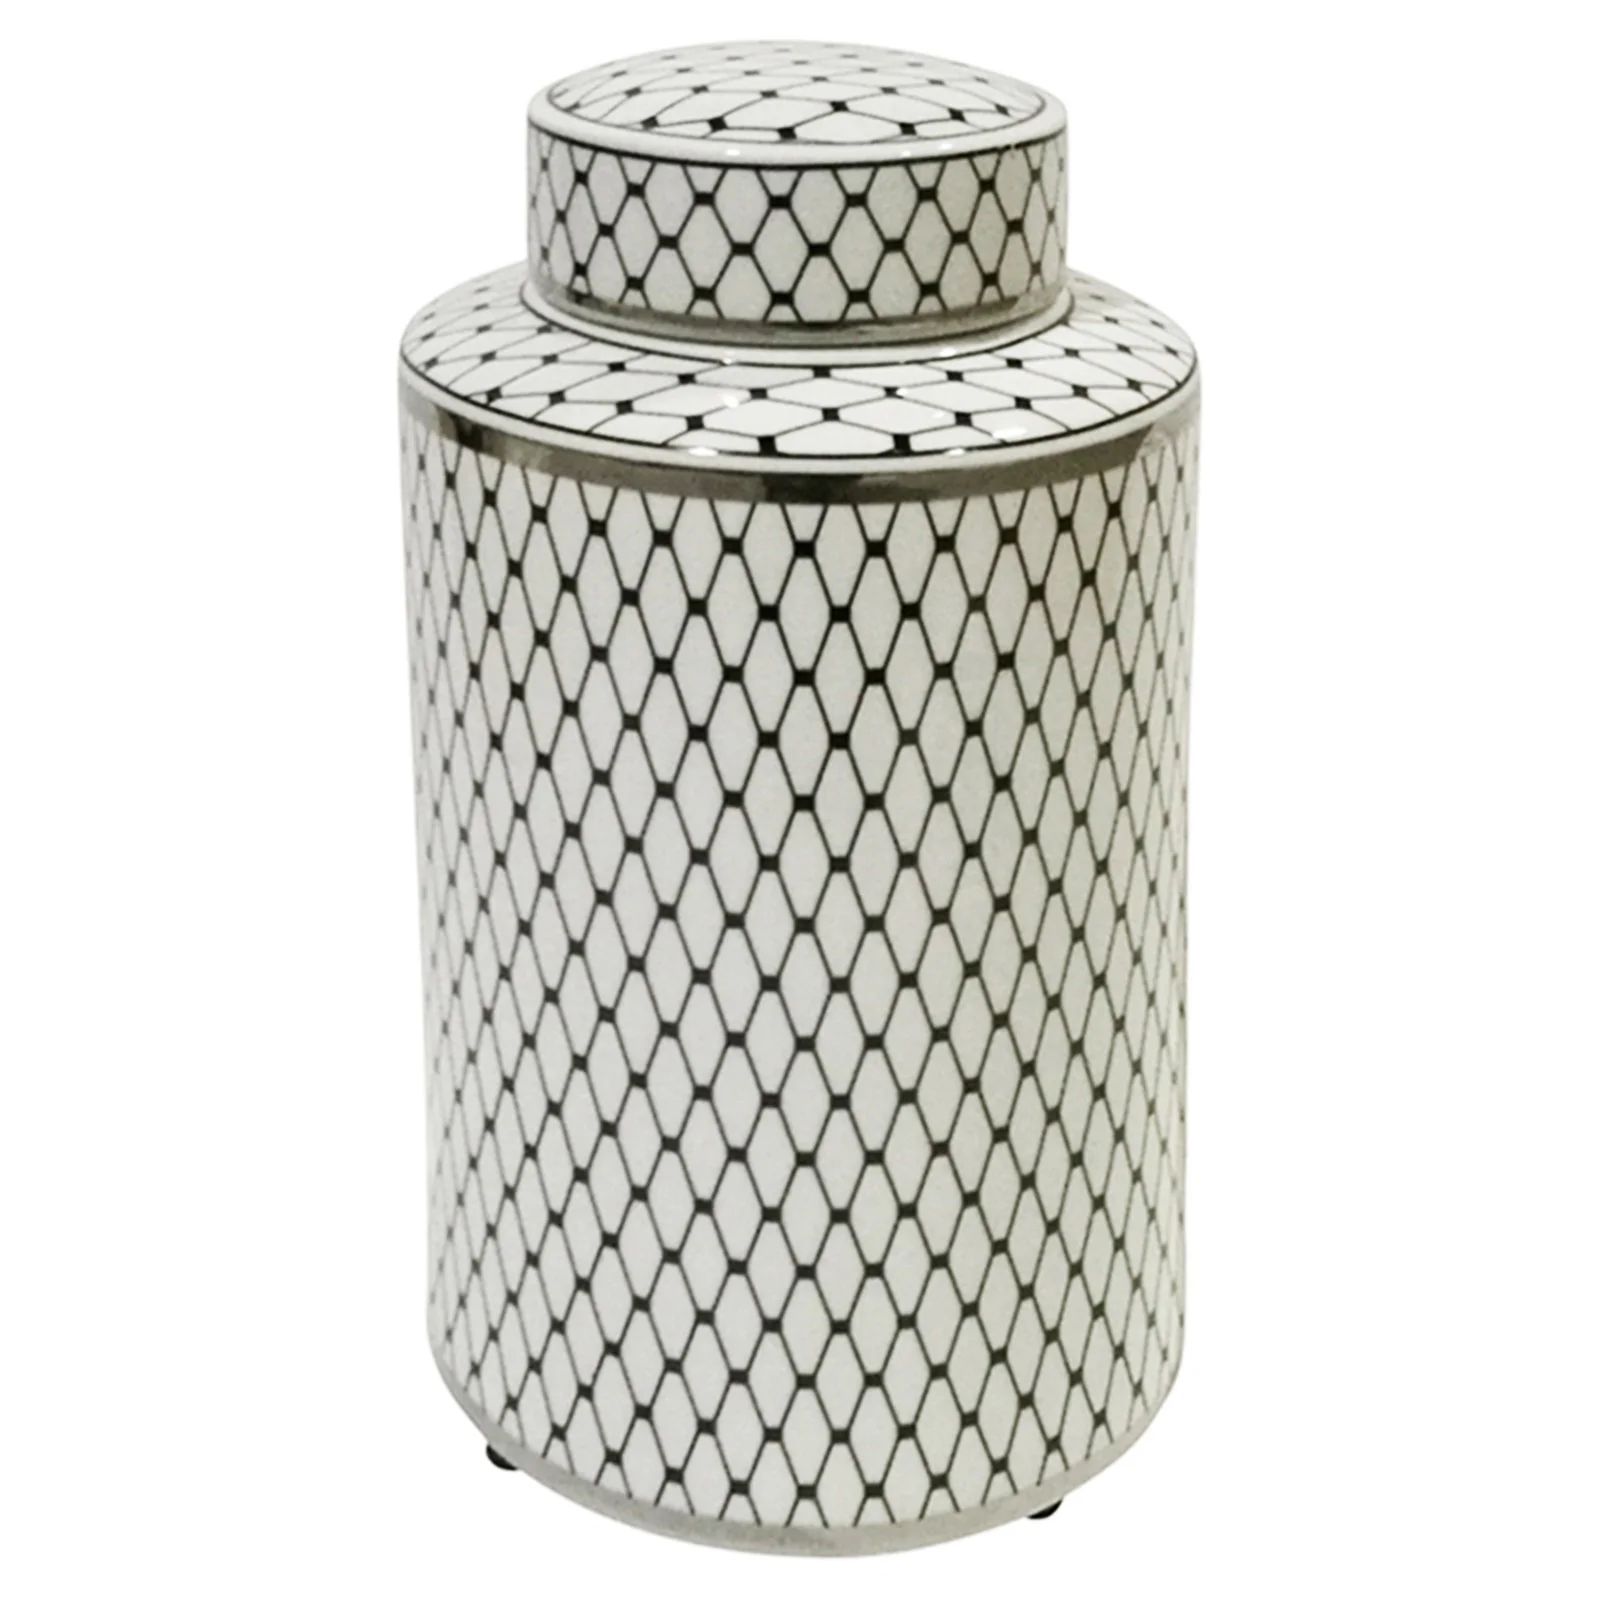 SageBrook Home Decorative White and Black Ceramic Jar with Silver Trim | Walmart (US)